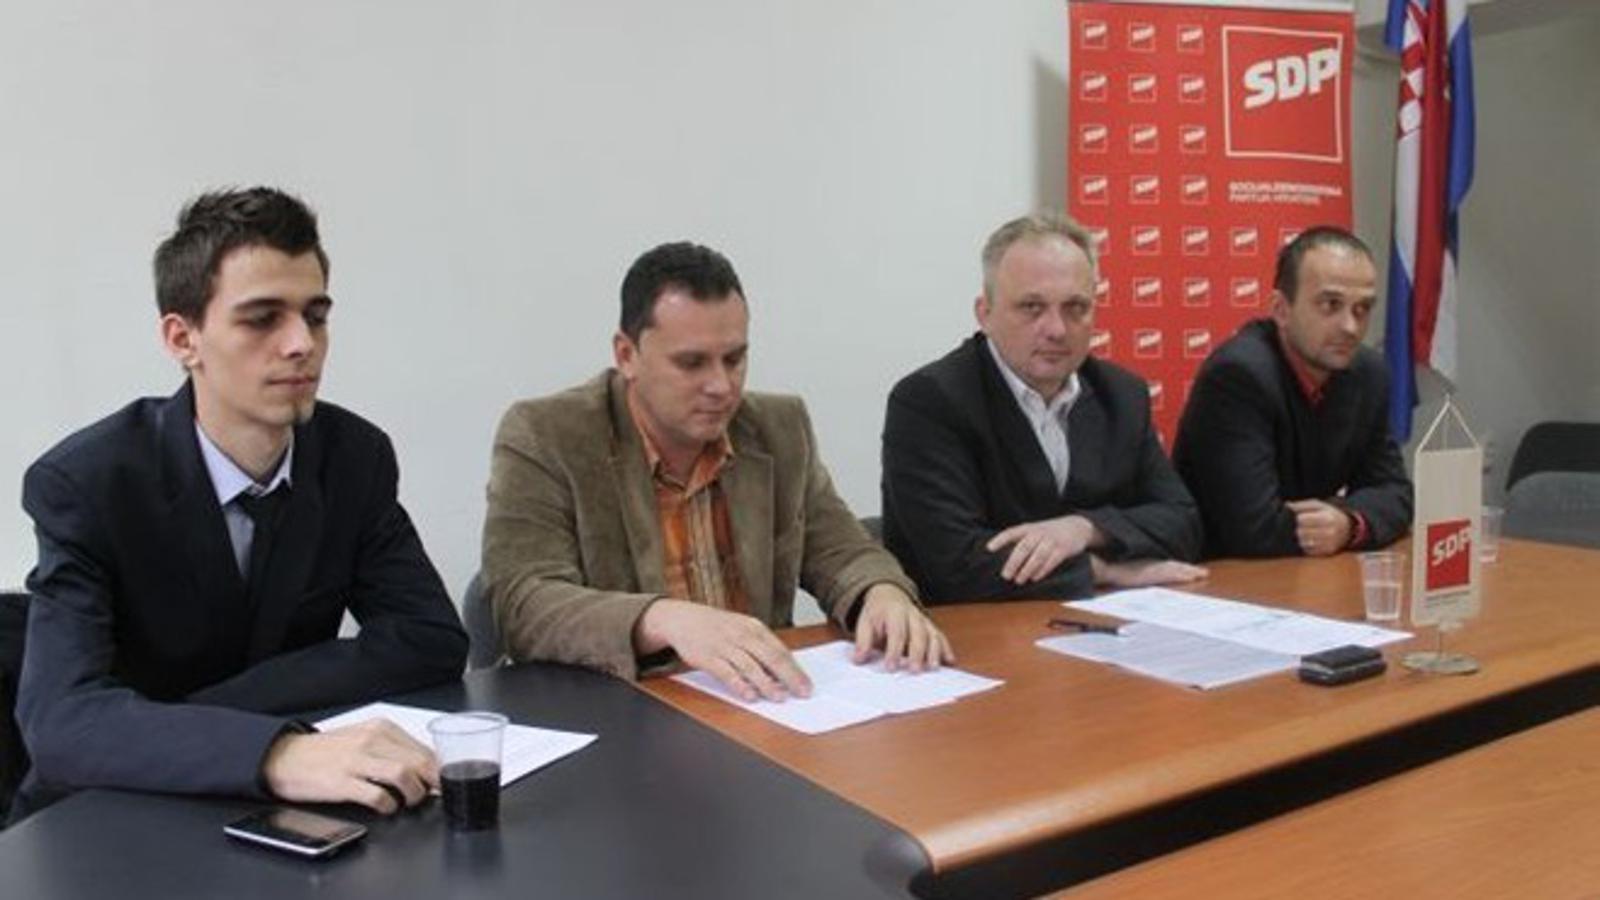 Prof. dr. sc. Roberto Lujić, dipl. ing. str., sa suradnicima na presici 11. siječnja 2013.